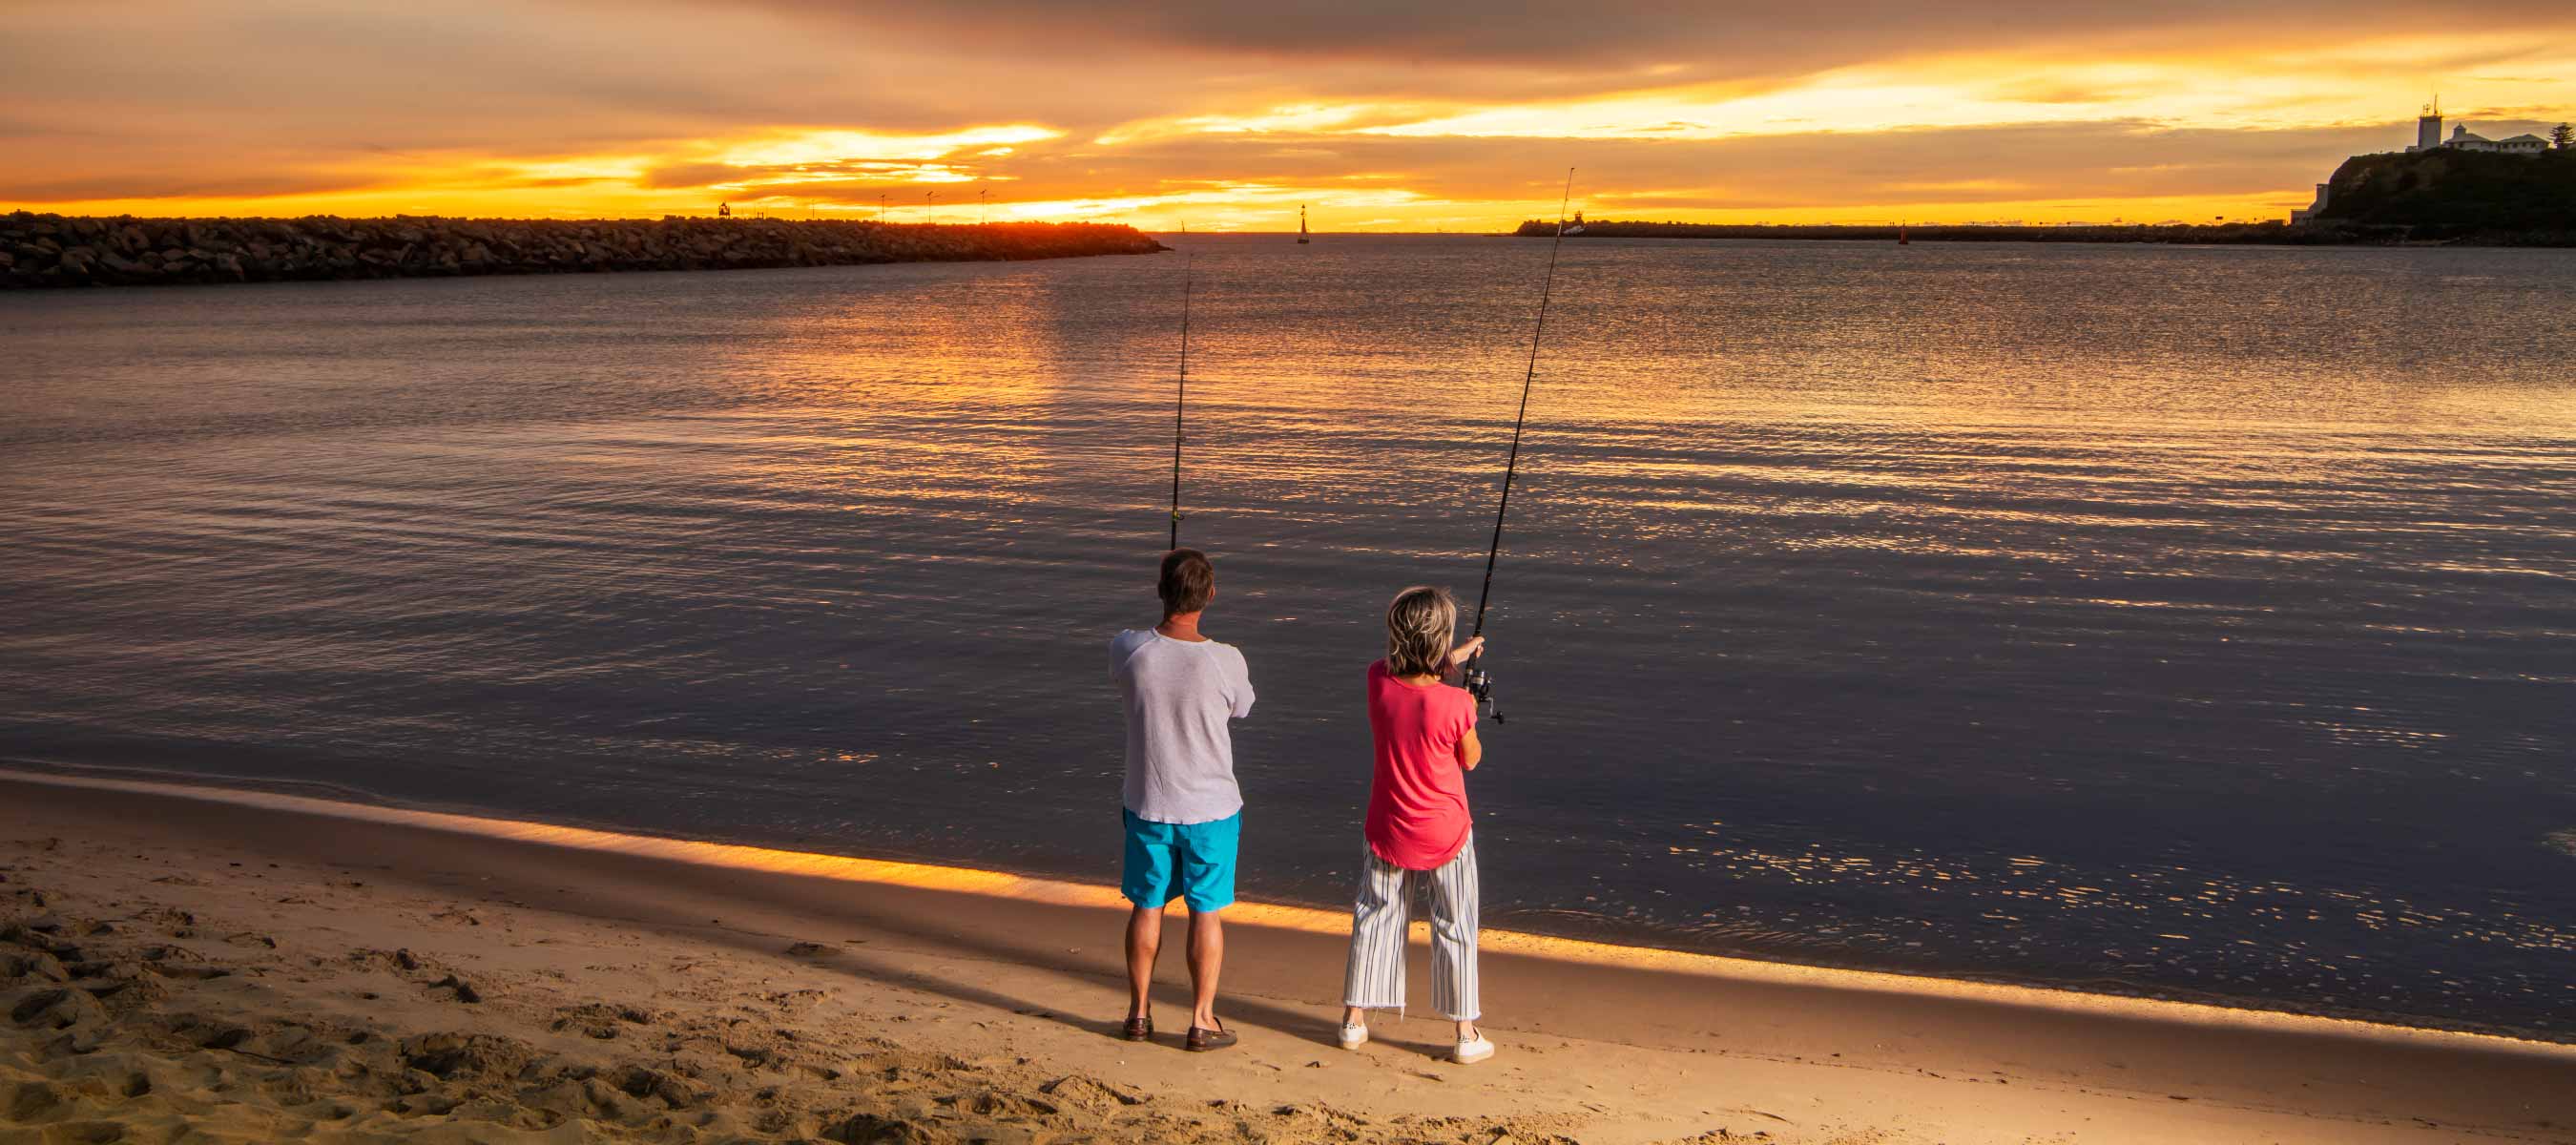 Fishing at Little beach at dawn